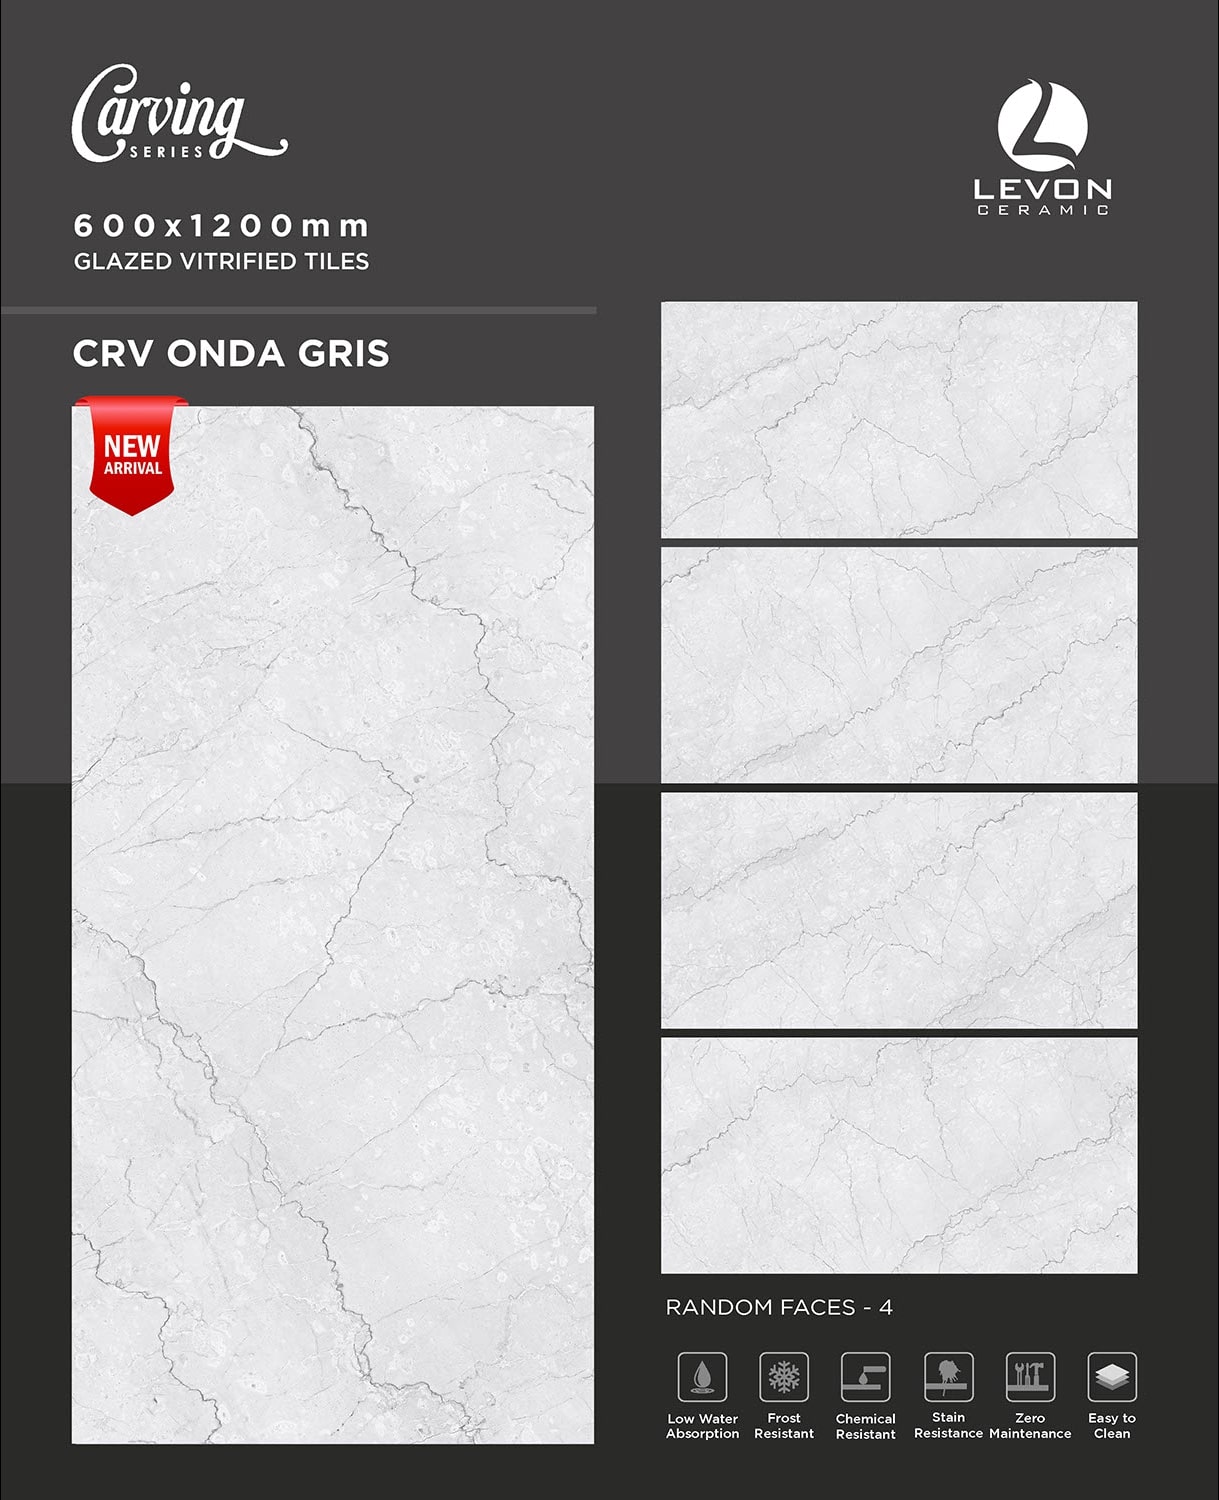 CRV ONDA GRIS - Product